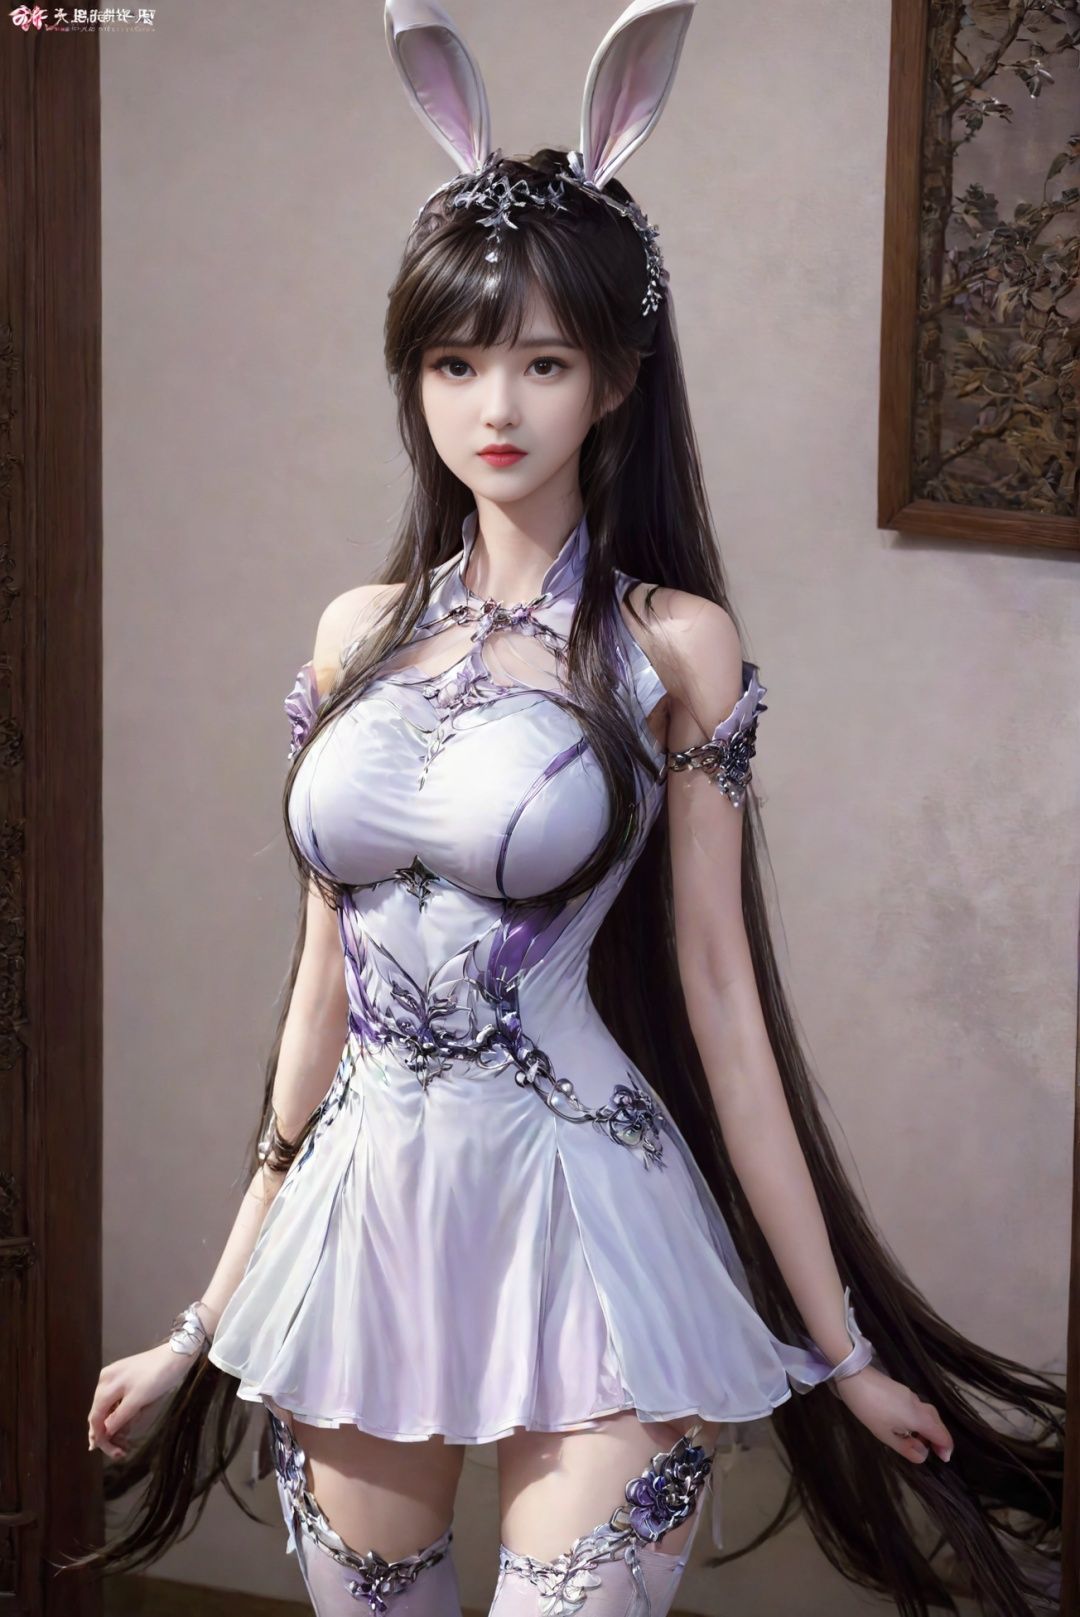 masterpiece,best quality,xiaowu,1girl,solo,long hair,lower_body,<lora:sdxllora-000011:1>,china_dress,